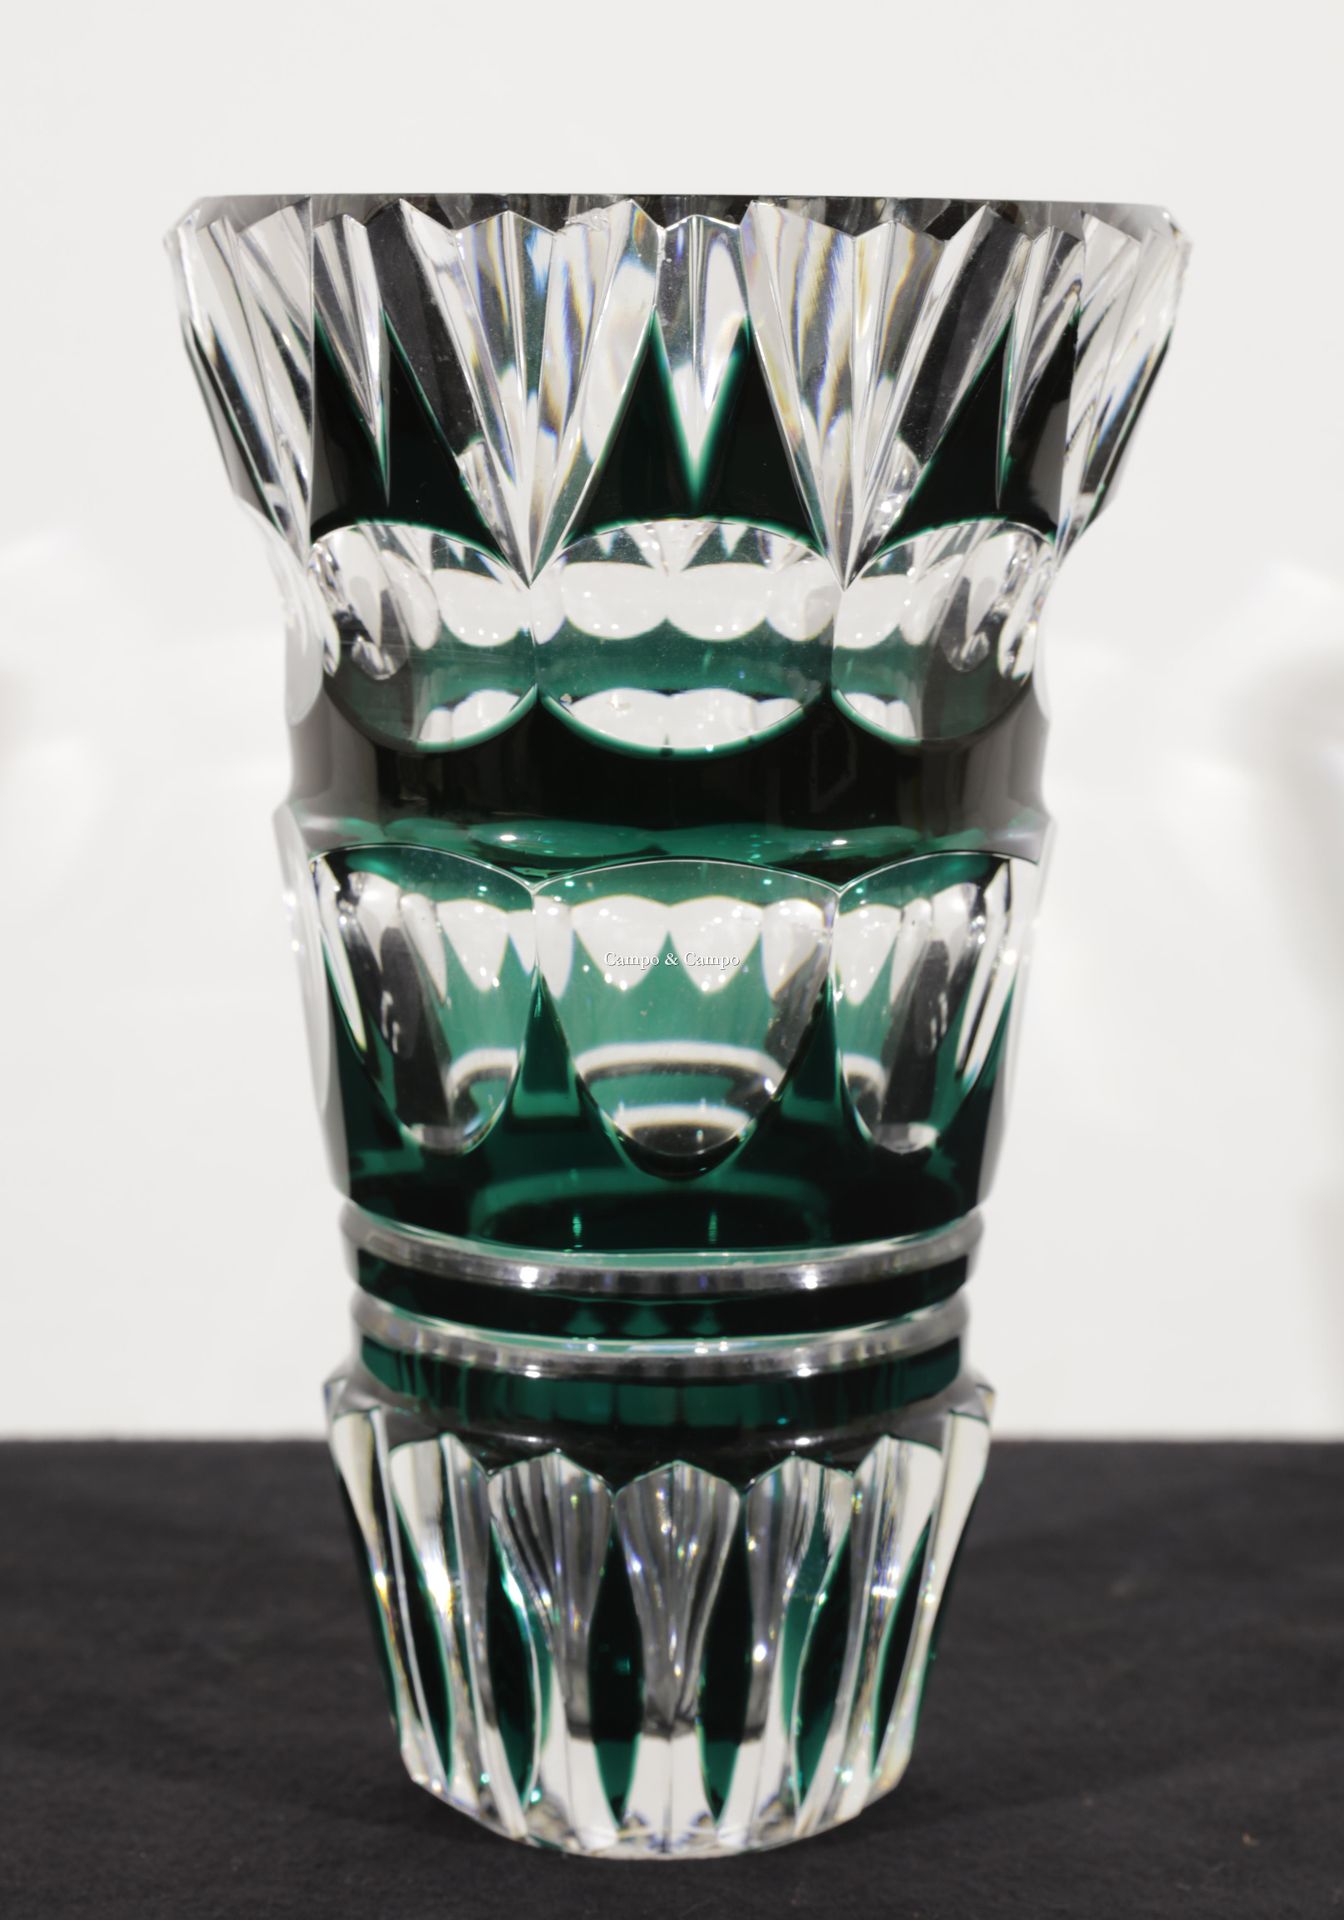 VARIA 1880-1964 Jarrón Val Saint Lambert en cristal transparente y verde
Val Sai&hellip;